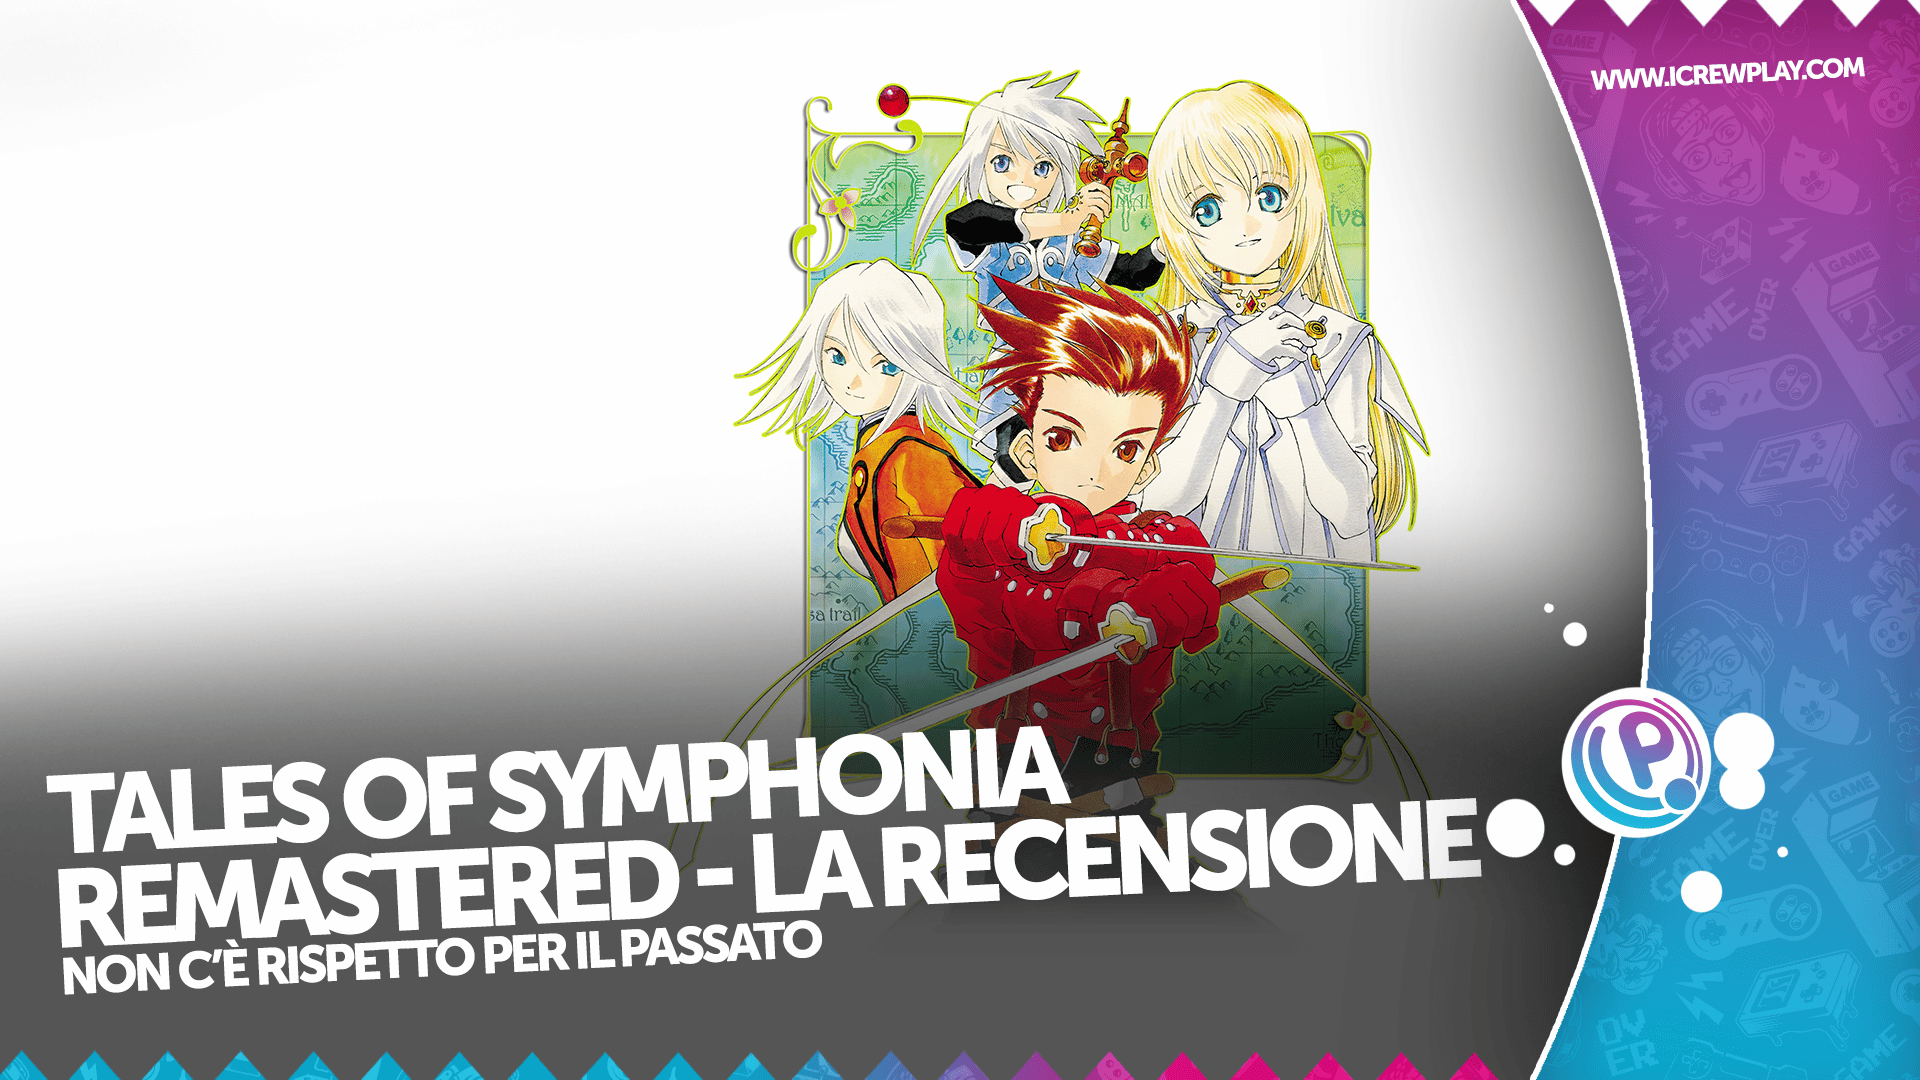 Tales of Symphonia Remastered - la recensione 4